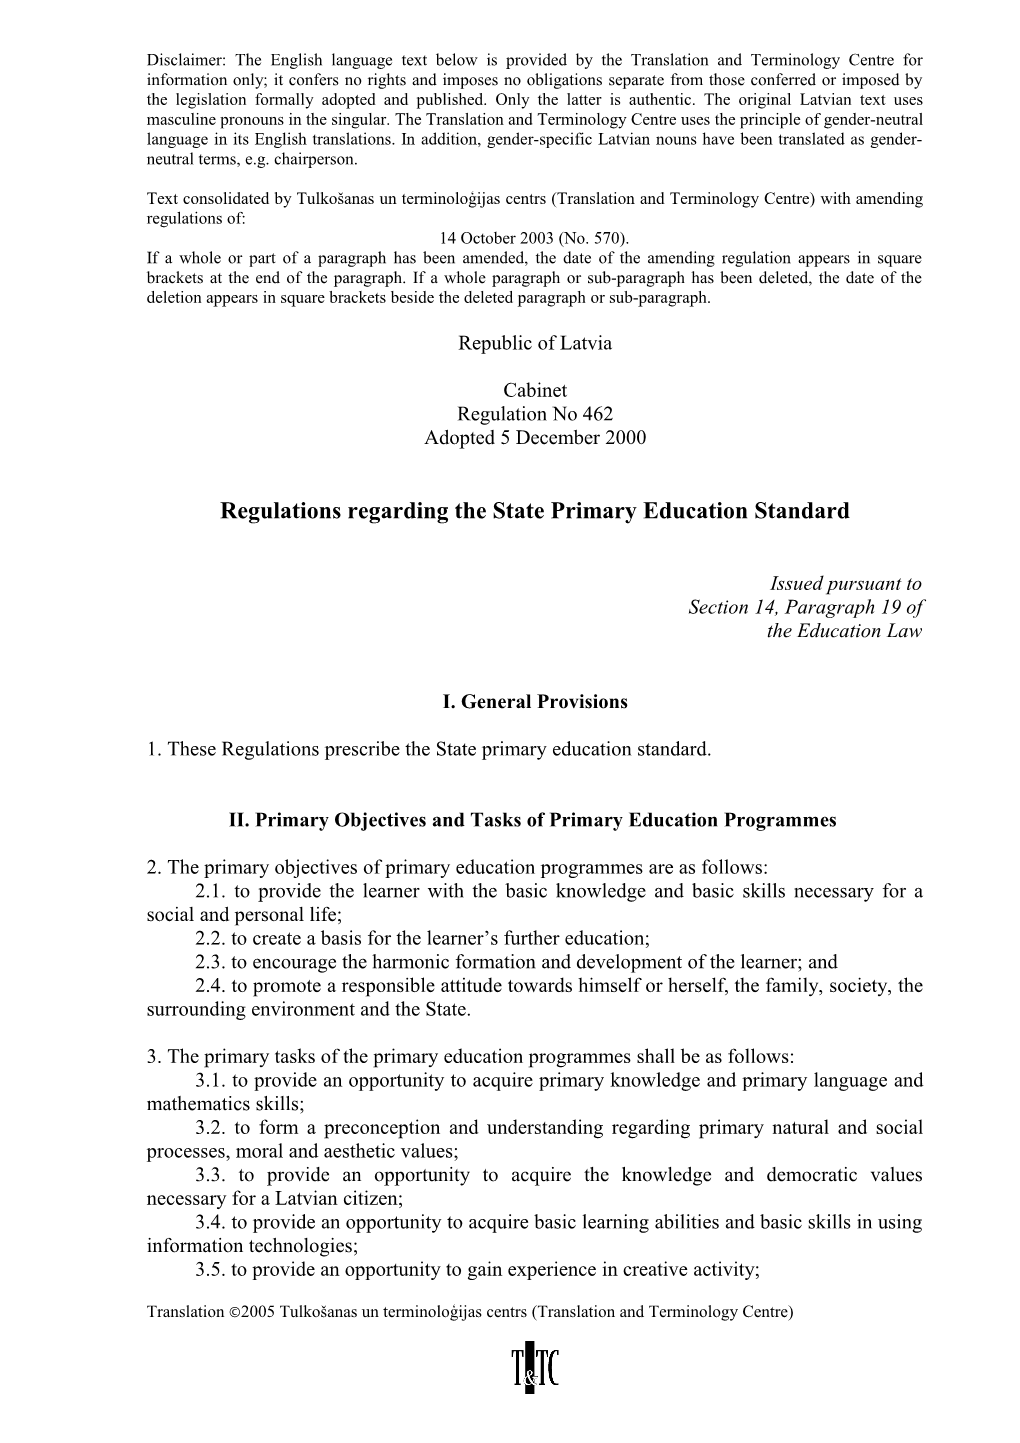 Regulations Regarding the State Primary Education Standard